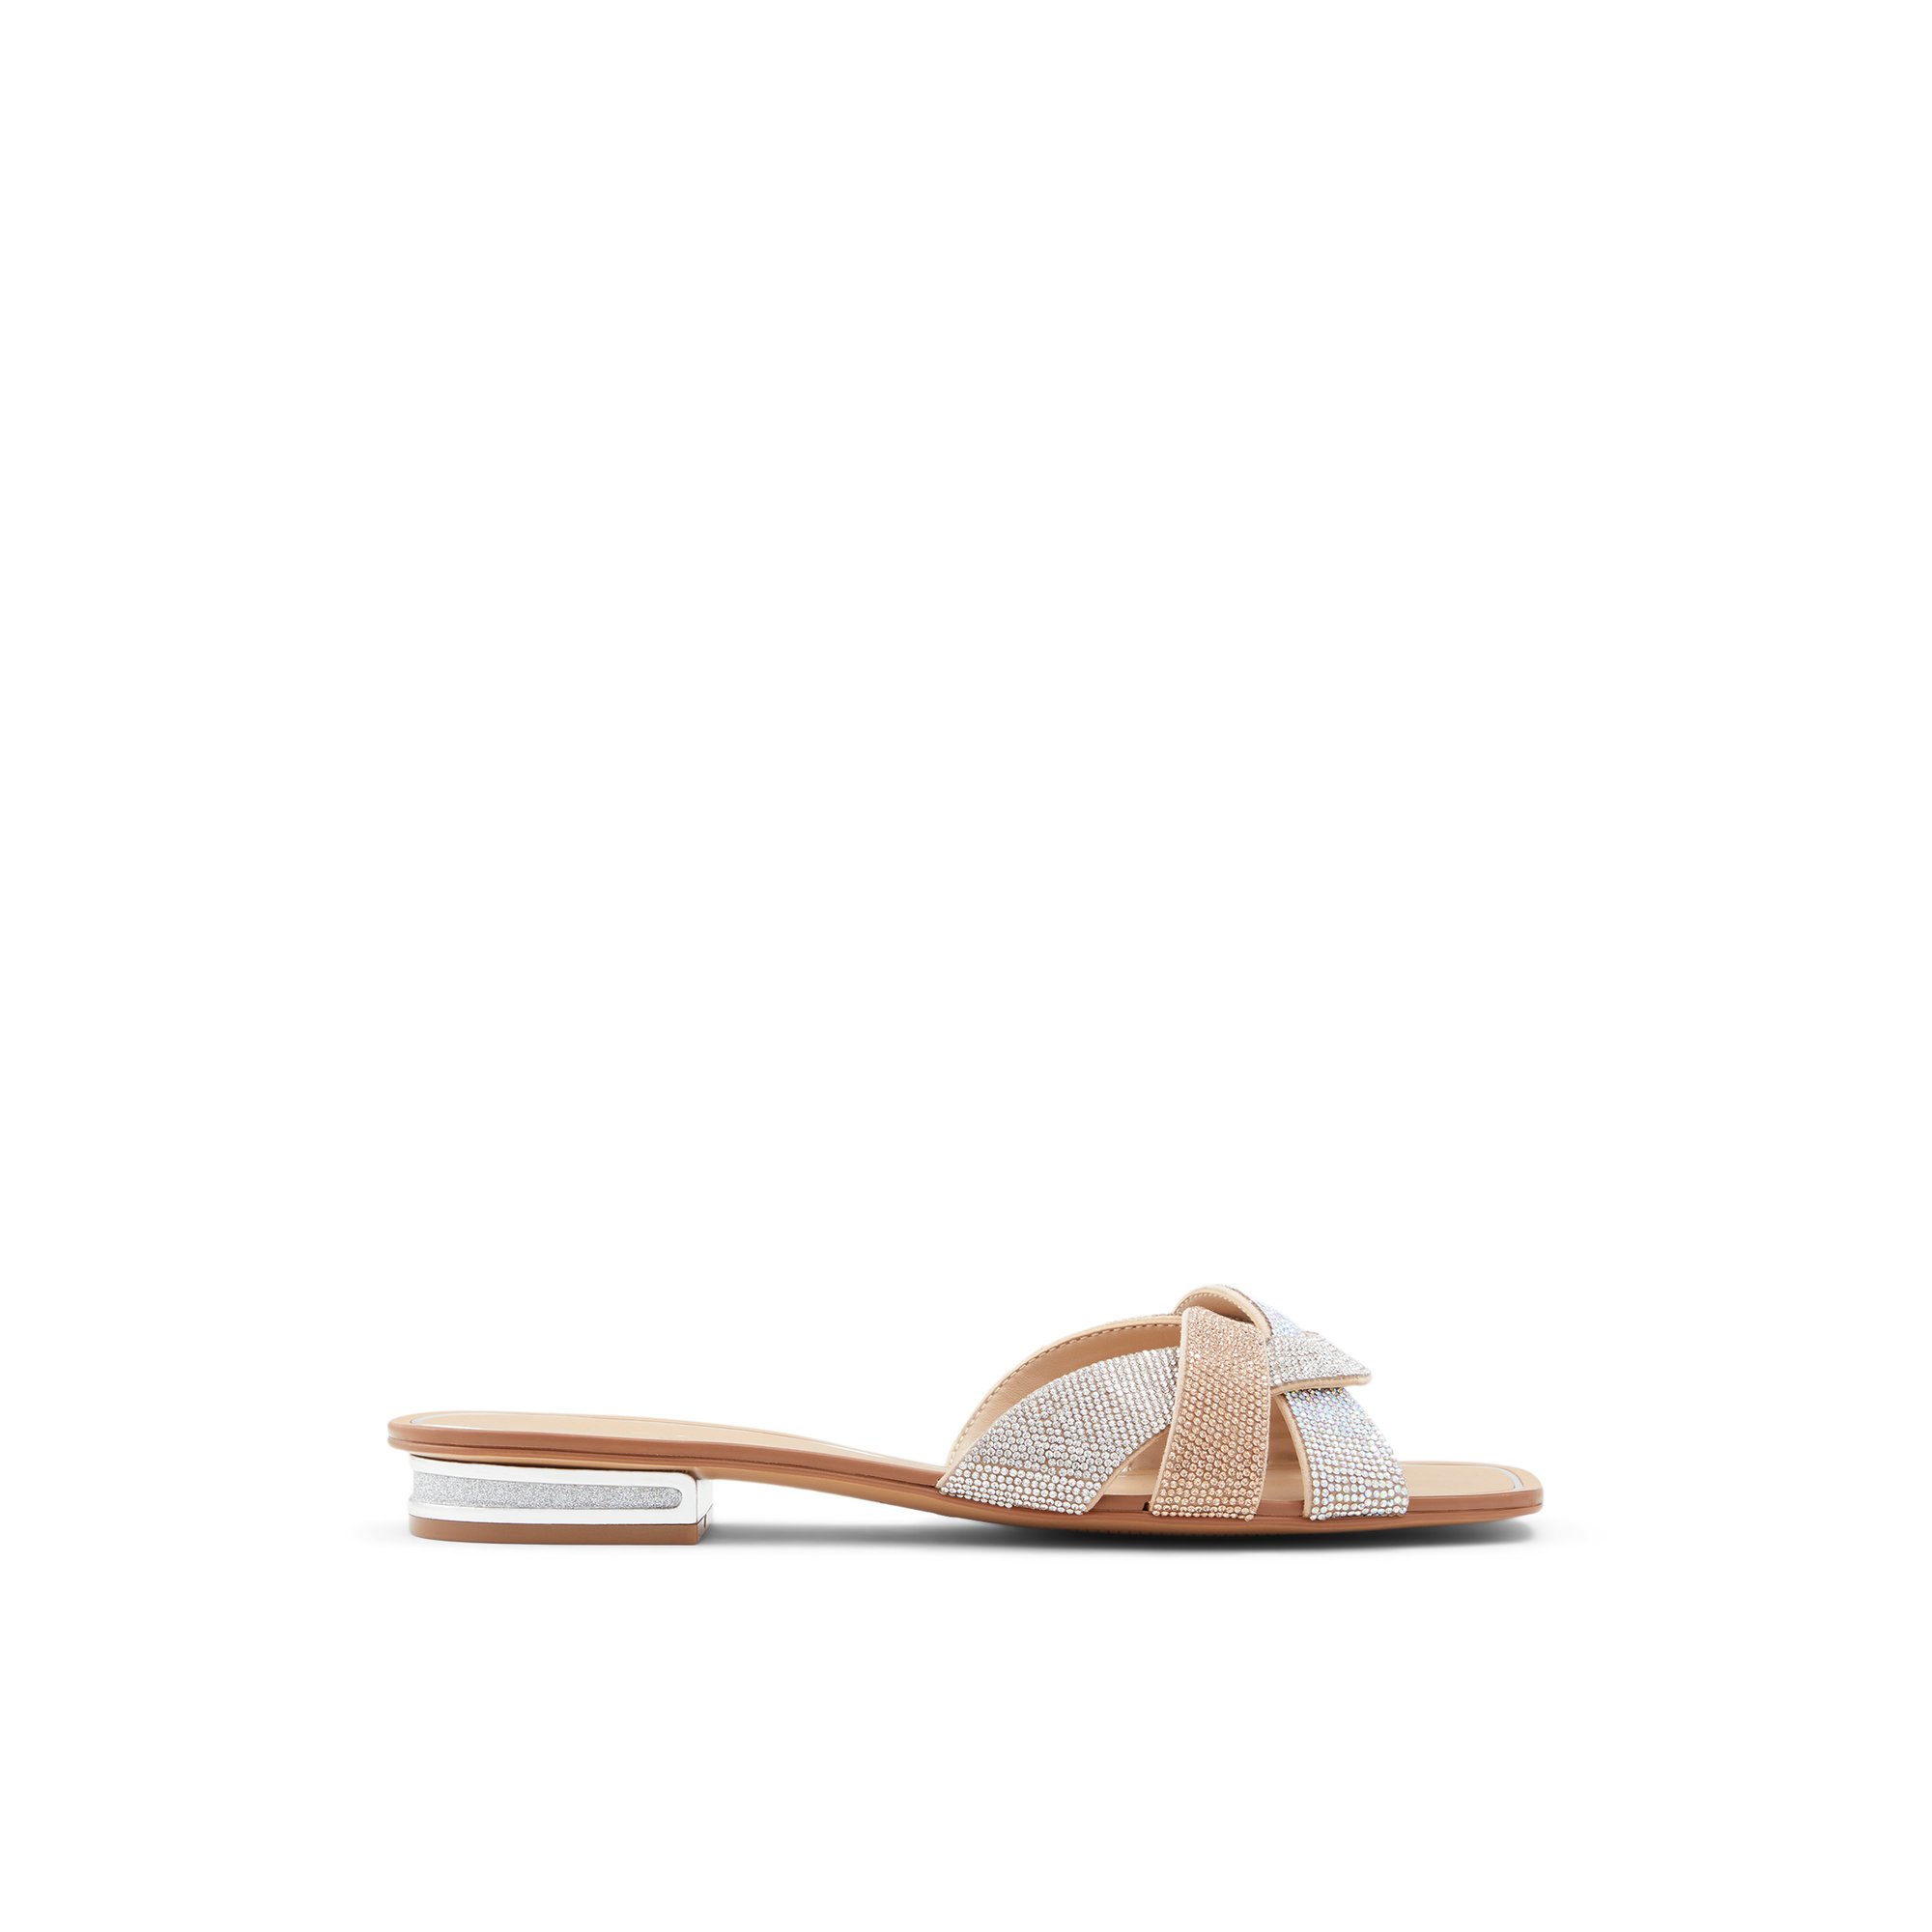 ALDO Coredith - Women's Sandals Flats - Beige